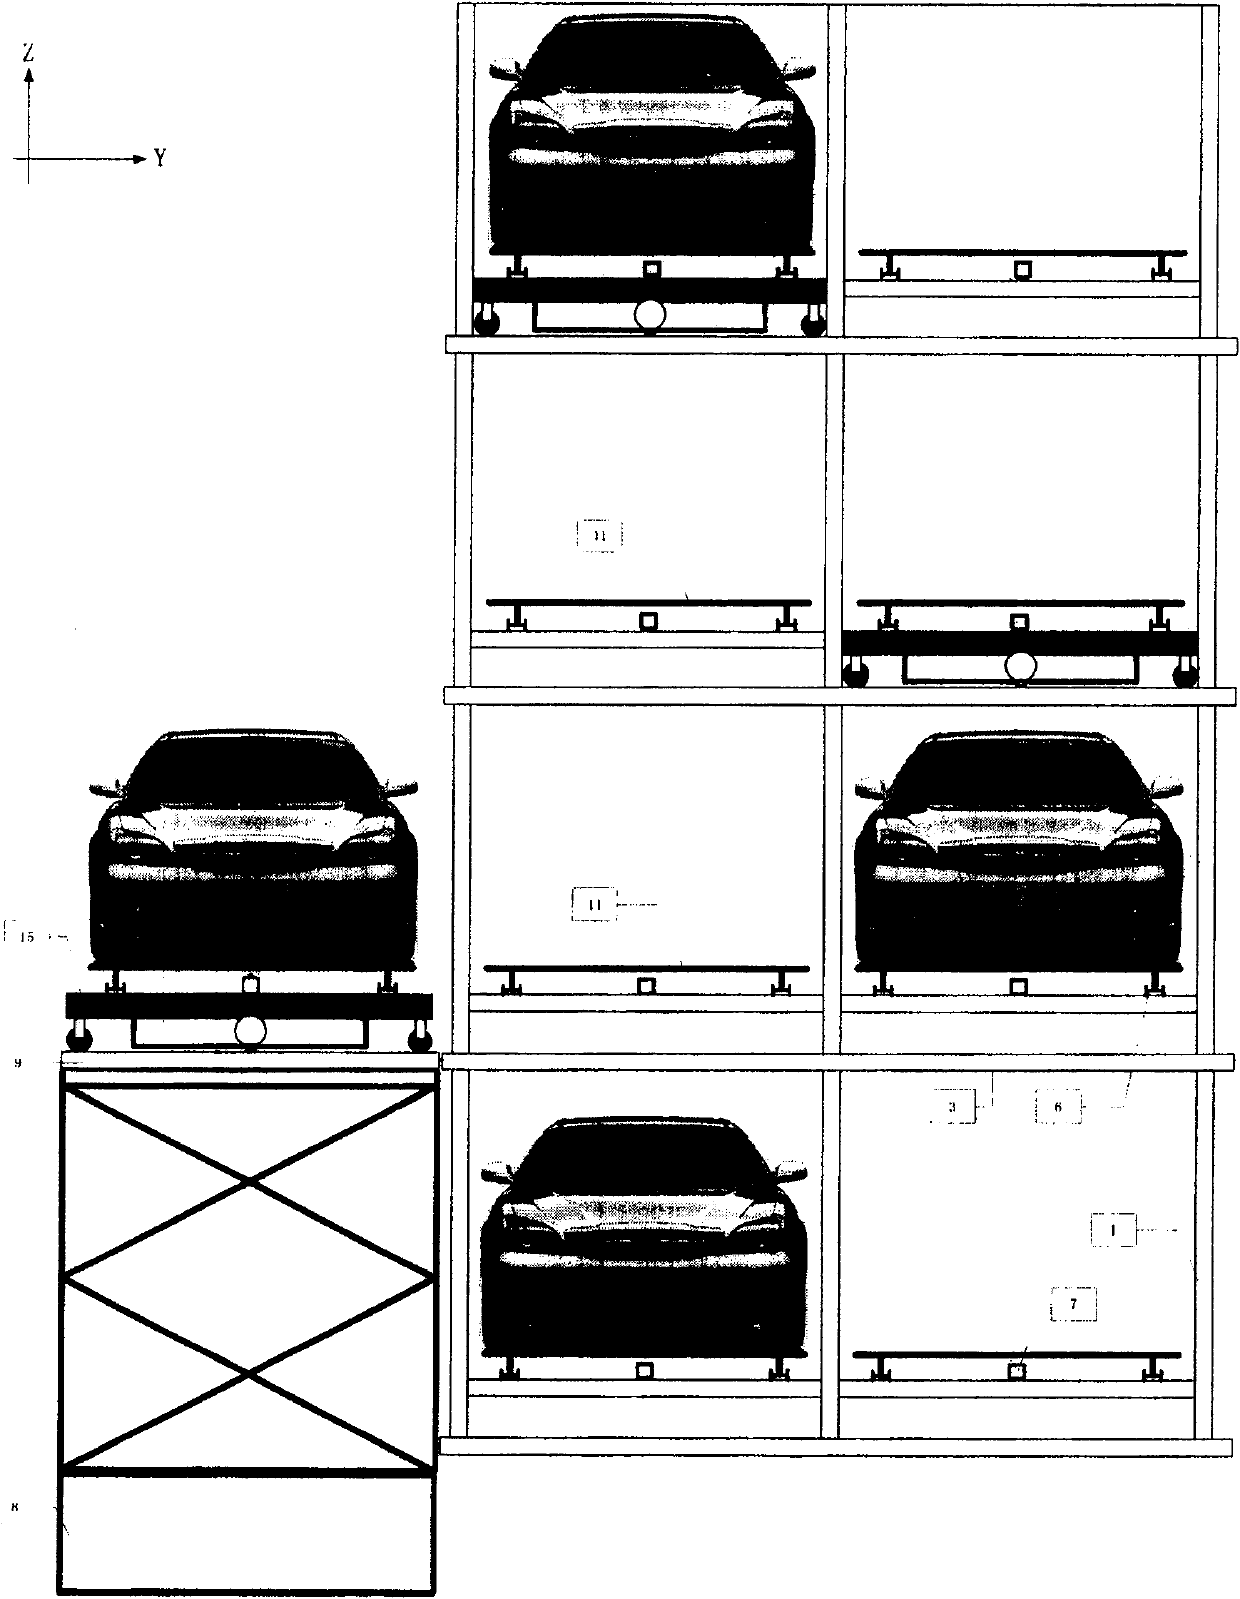 Stereoscopic garage system